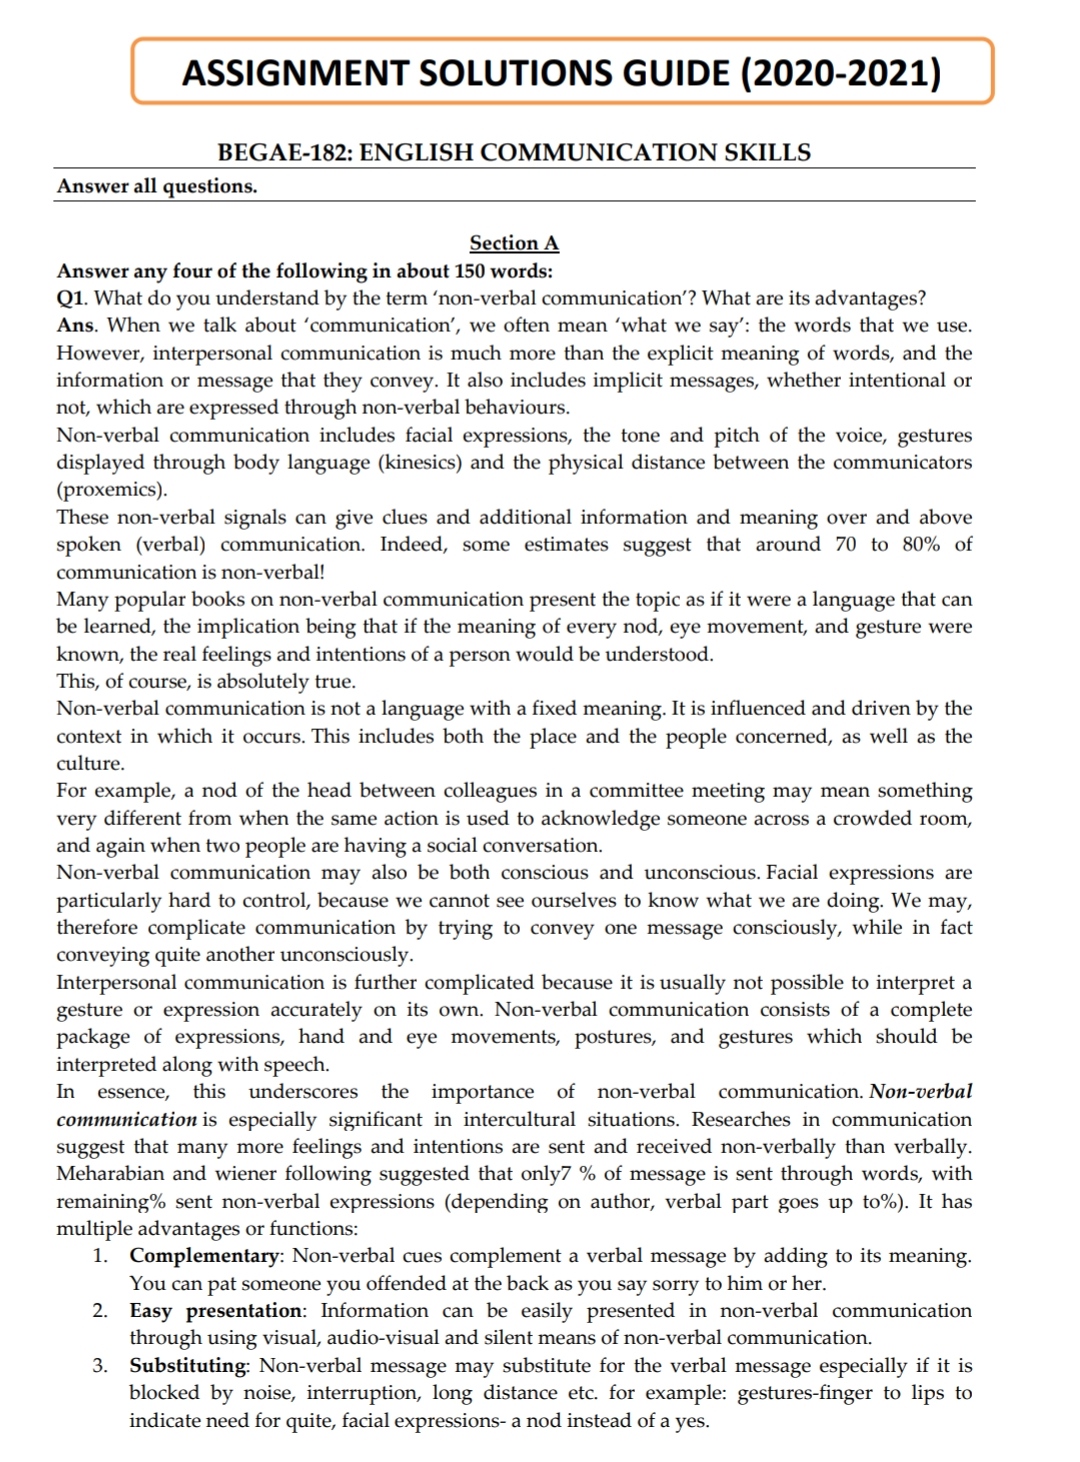 begae 182 english communication assignment pdf